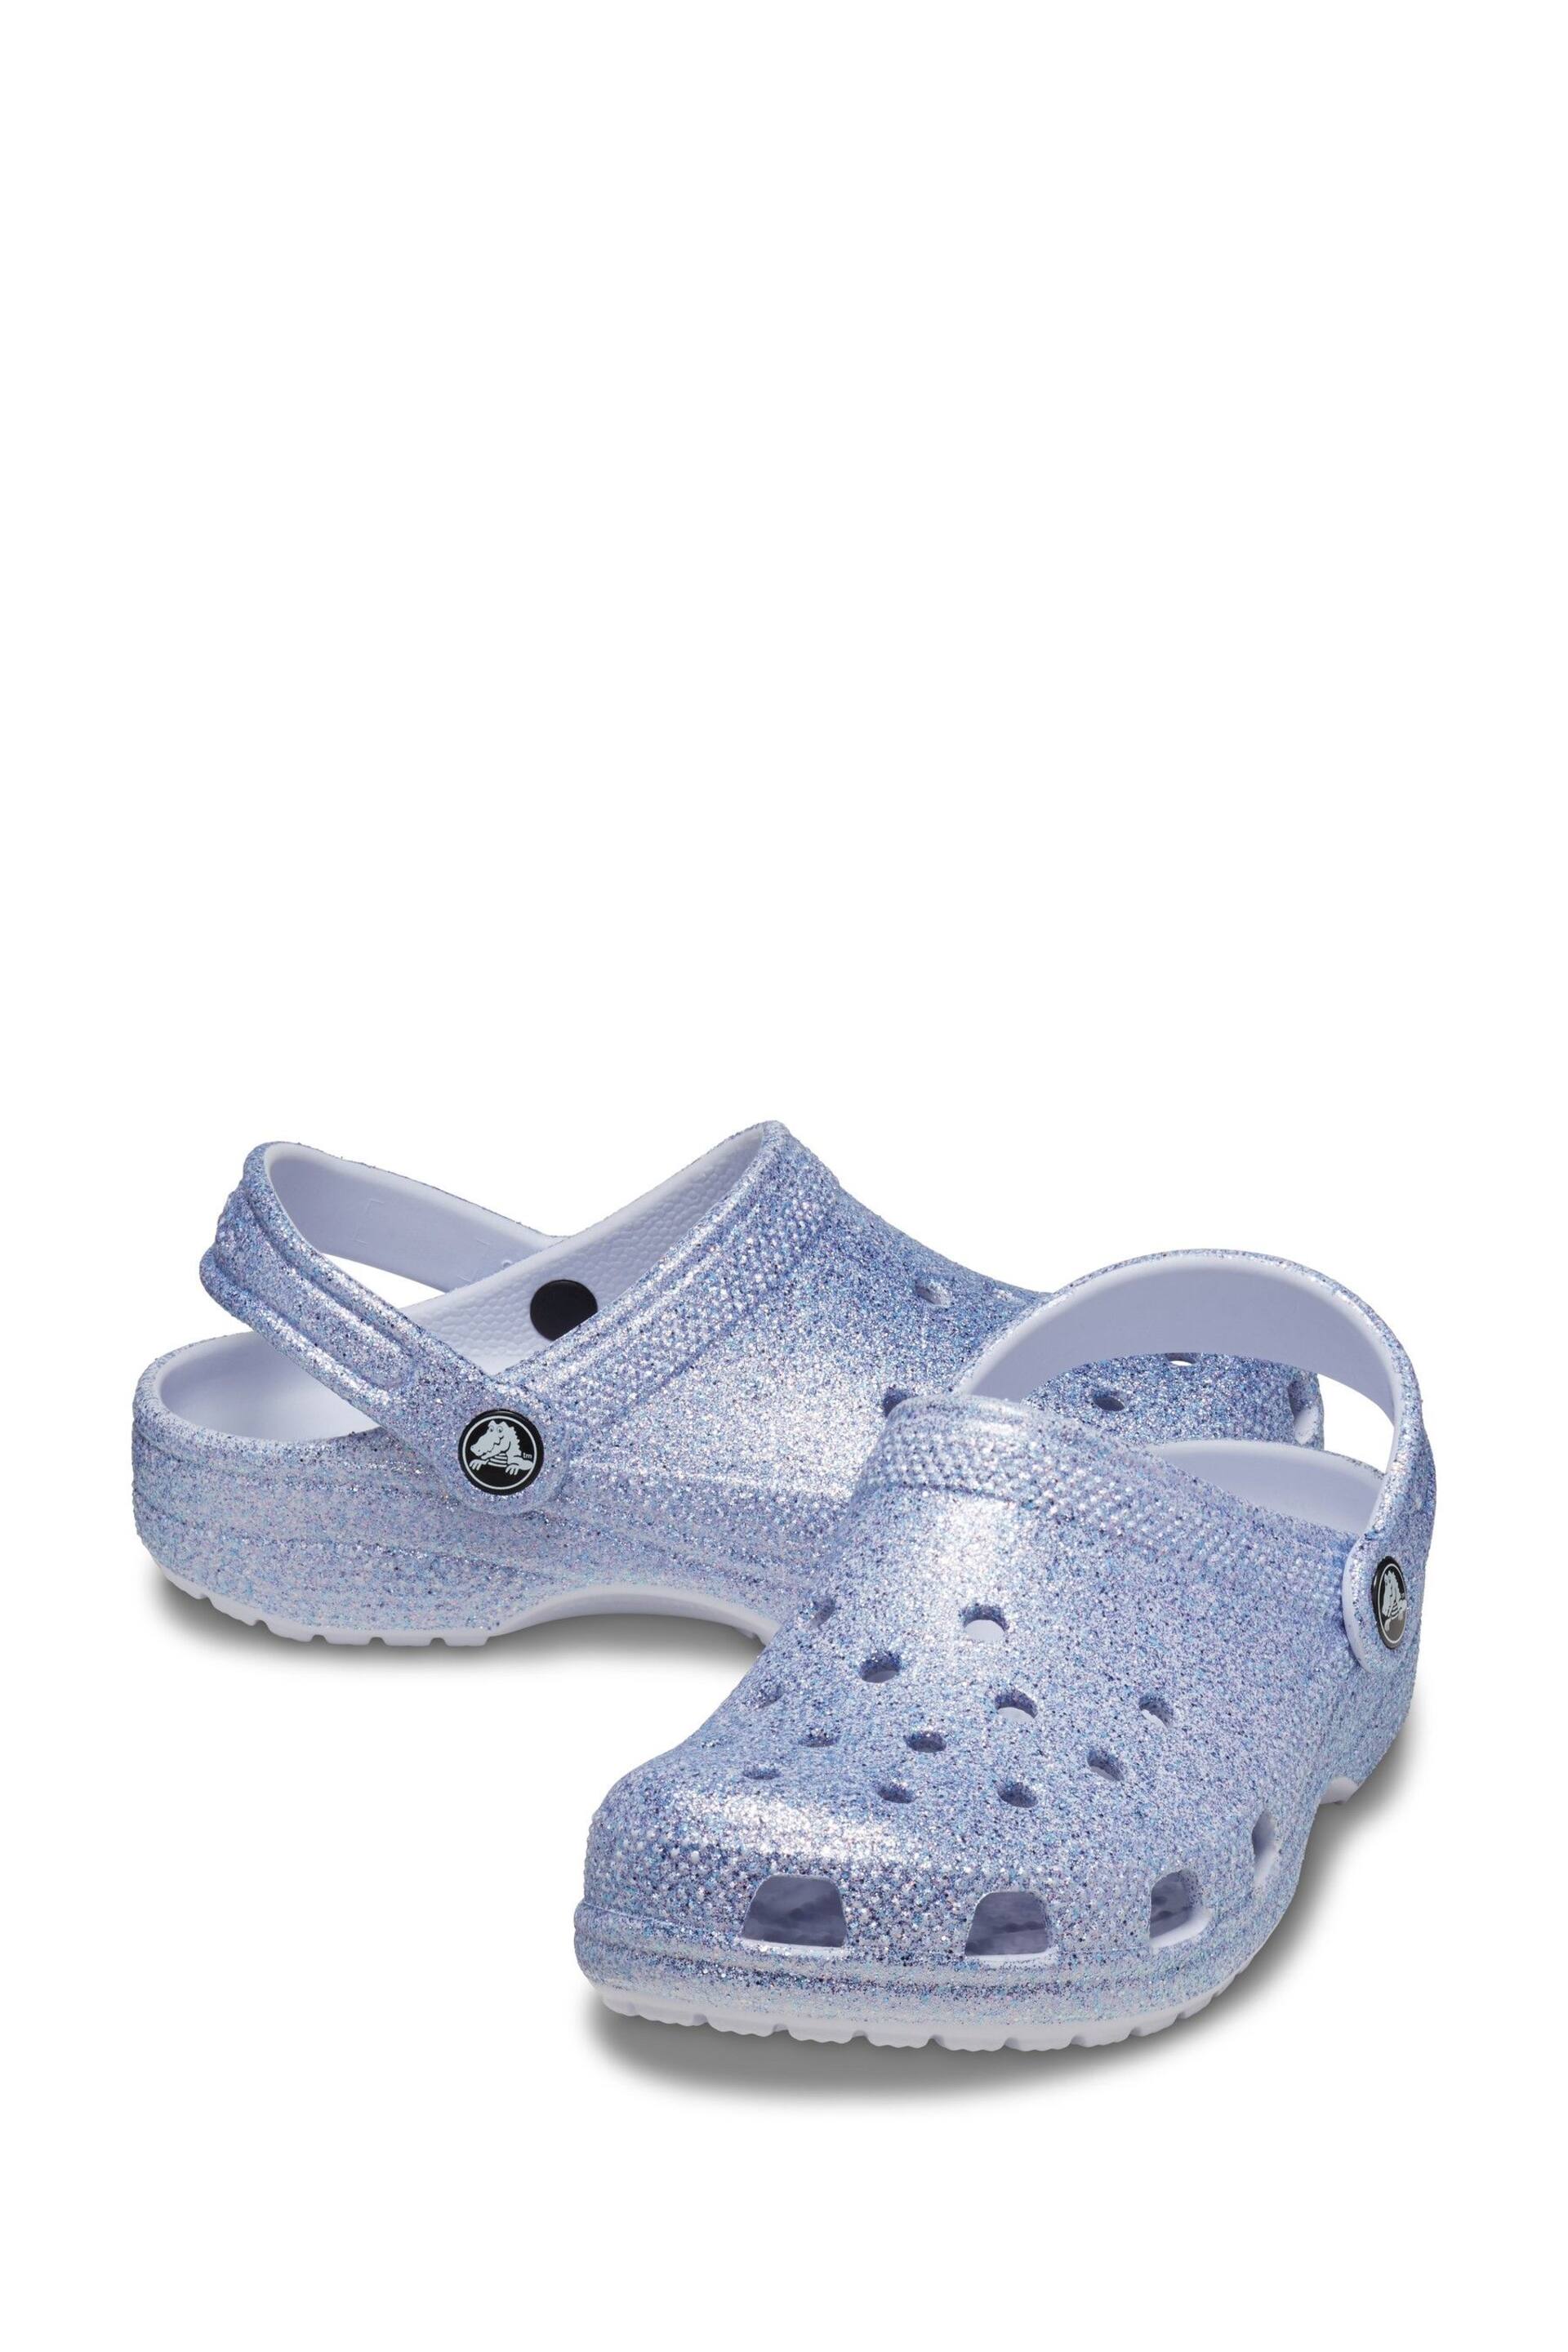 Crocs Kids Violet Purple	Classic Glitter Clogs - Image 3 of 6